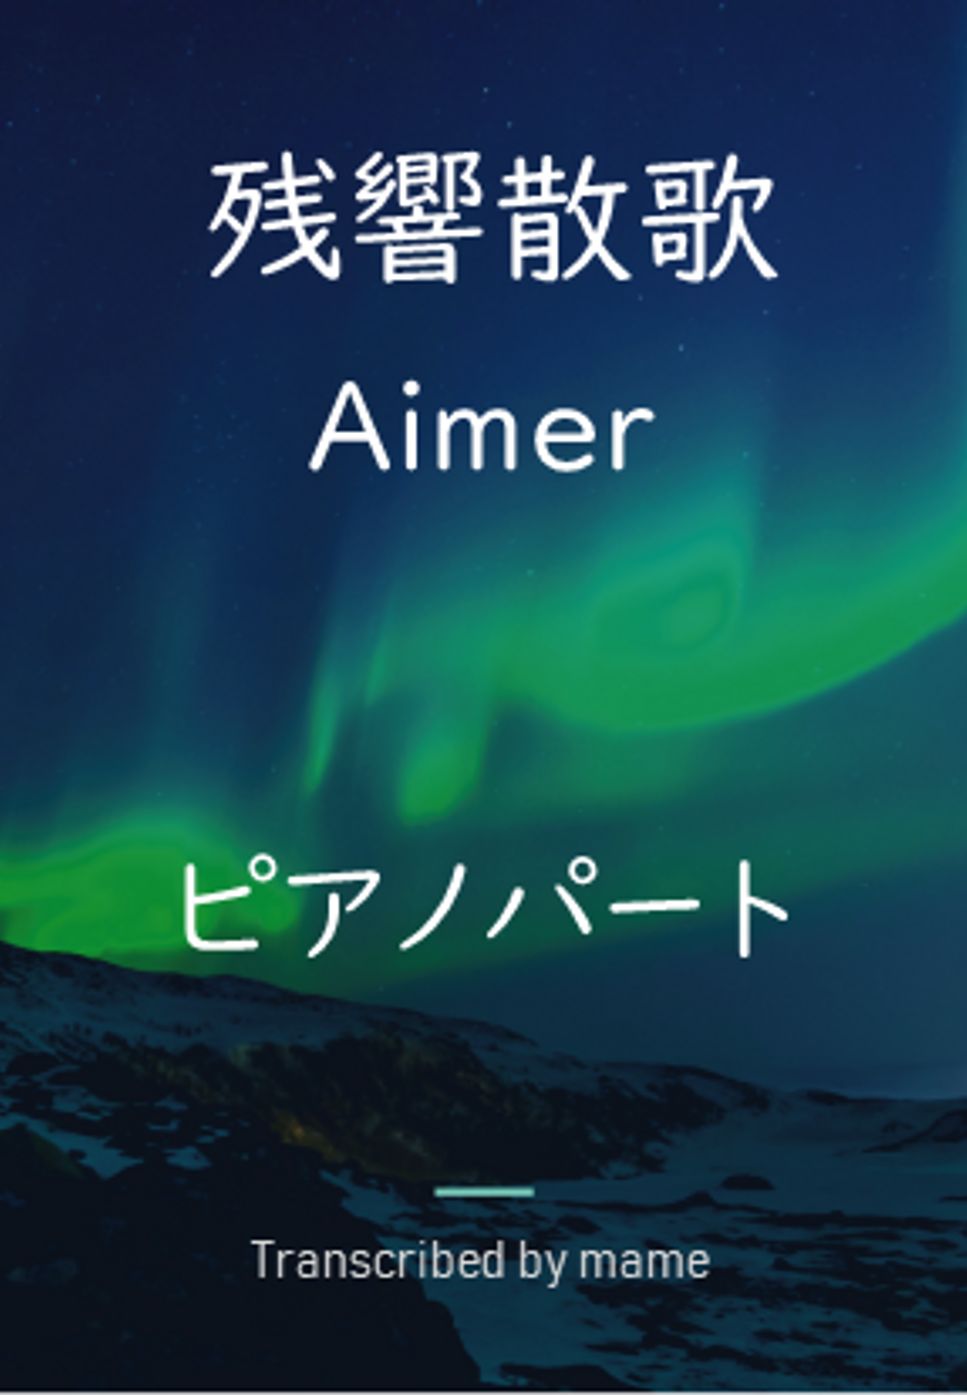 Aimer - 残響散歌 (piano part) by mame